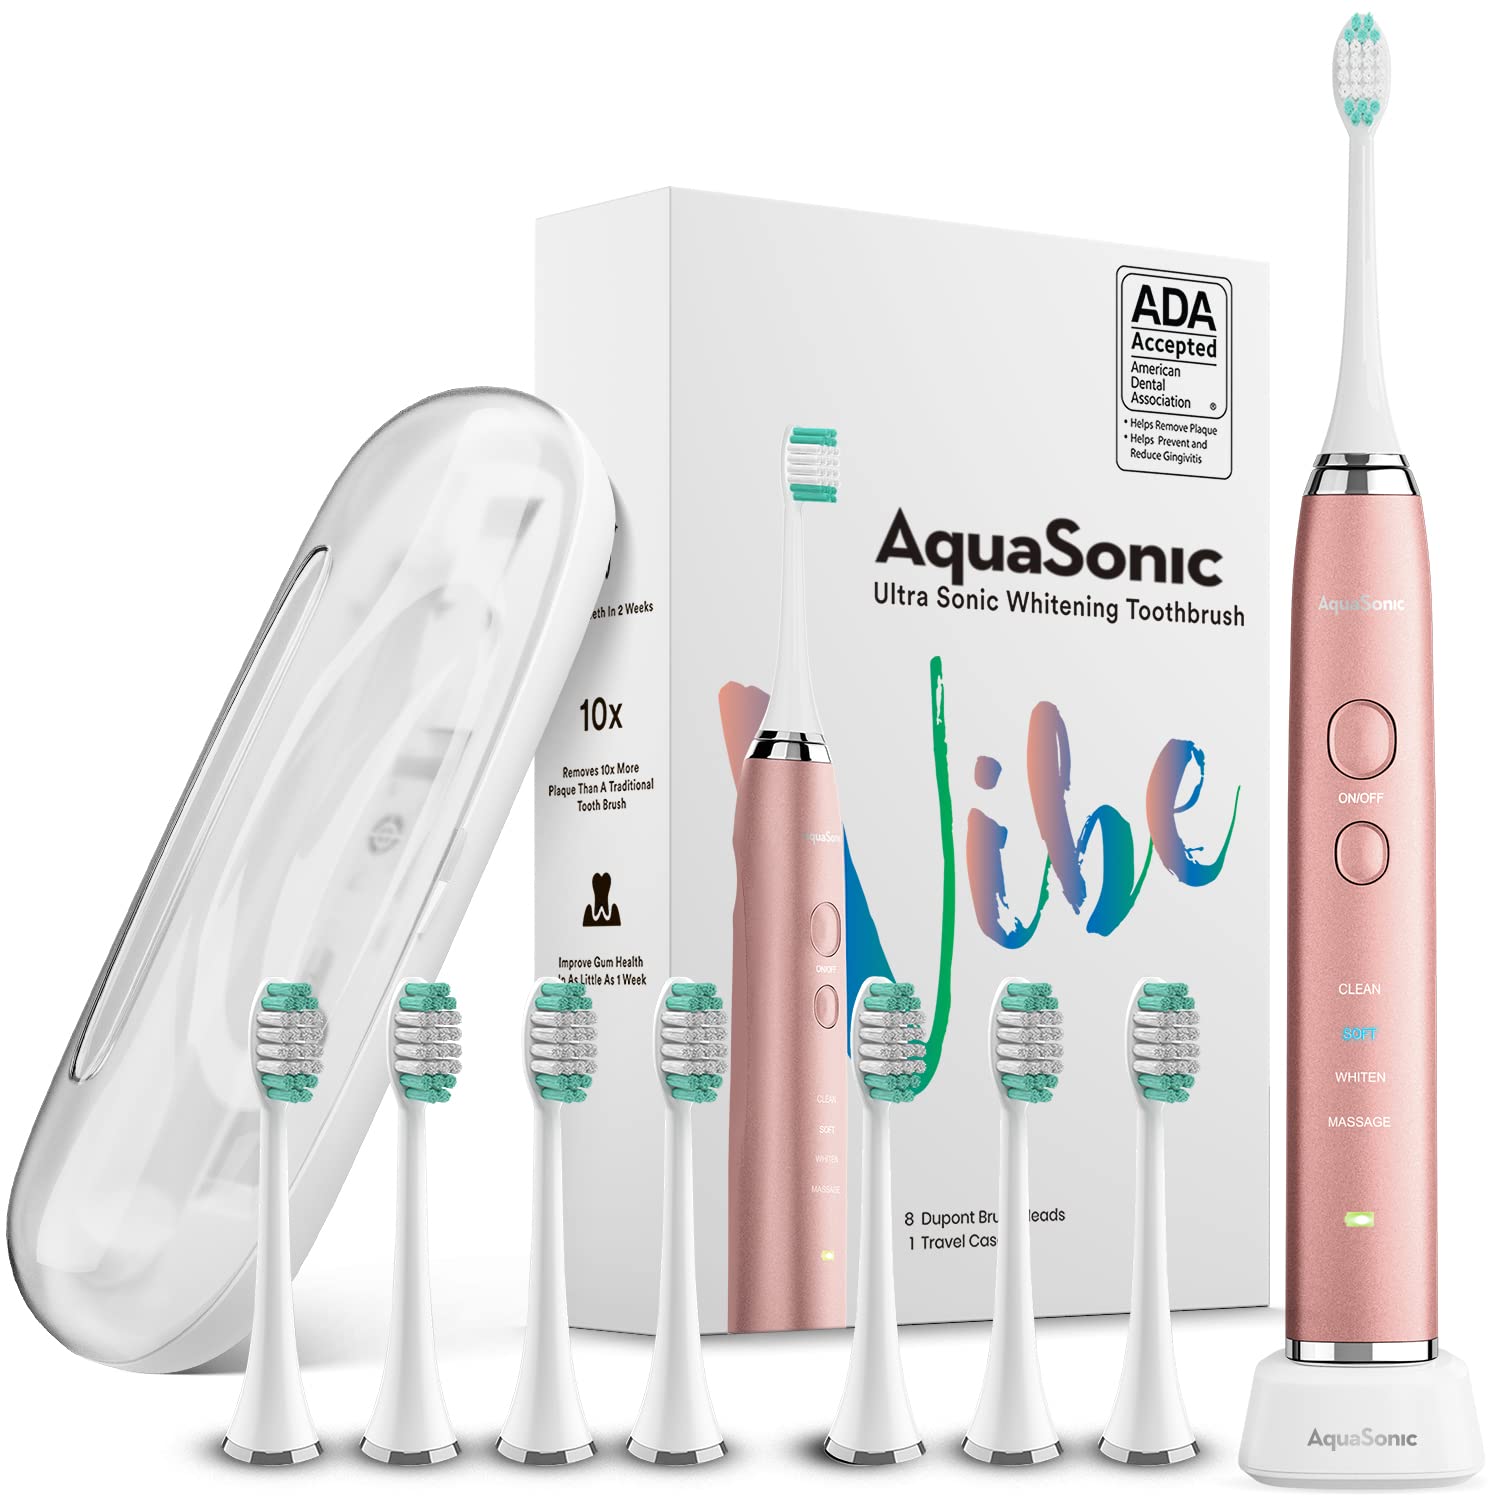 Aquasonic Vibe Series Ultra Whitening Toothbrush Aqua Flosser